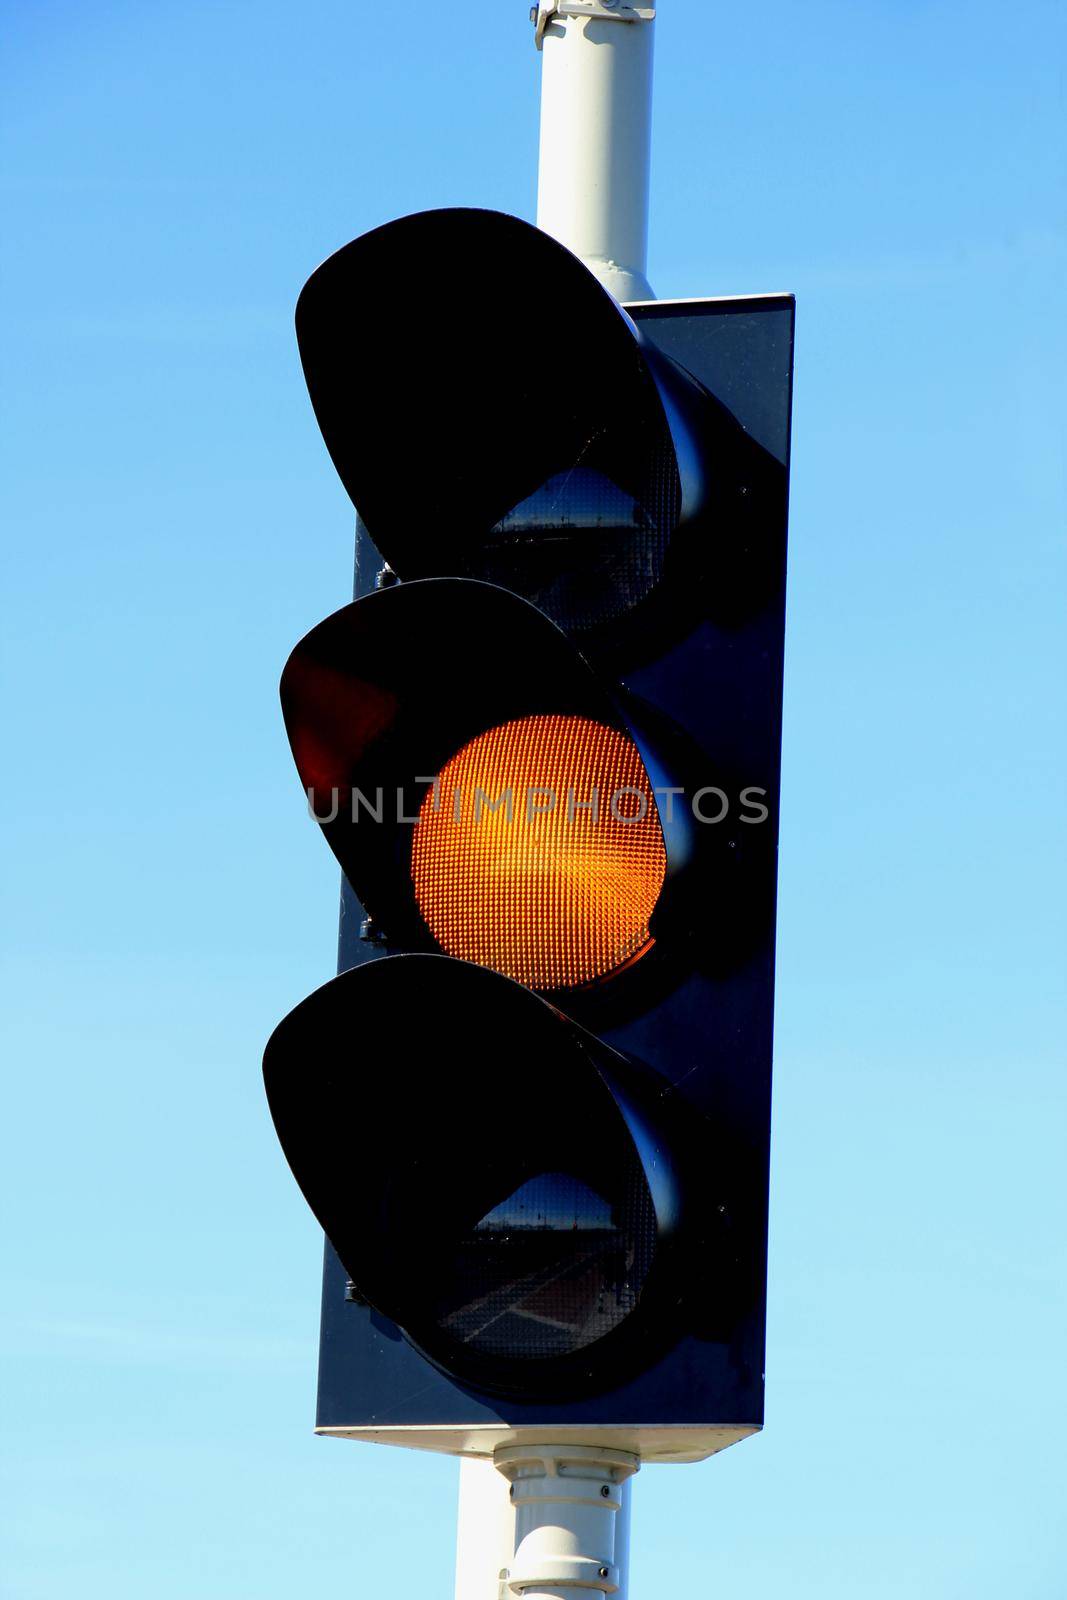 Traffic lights in a clear blue sky by studioportosabbia